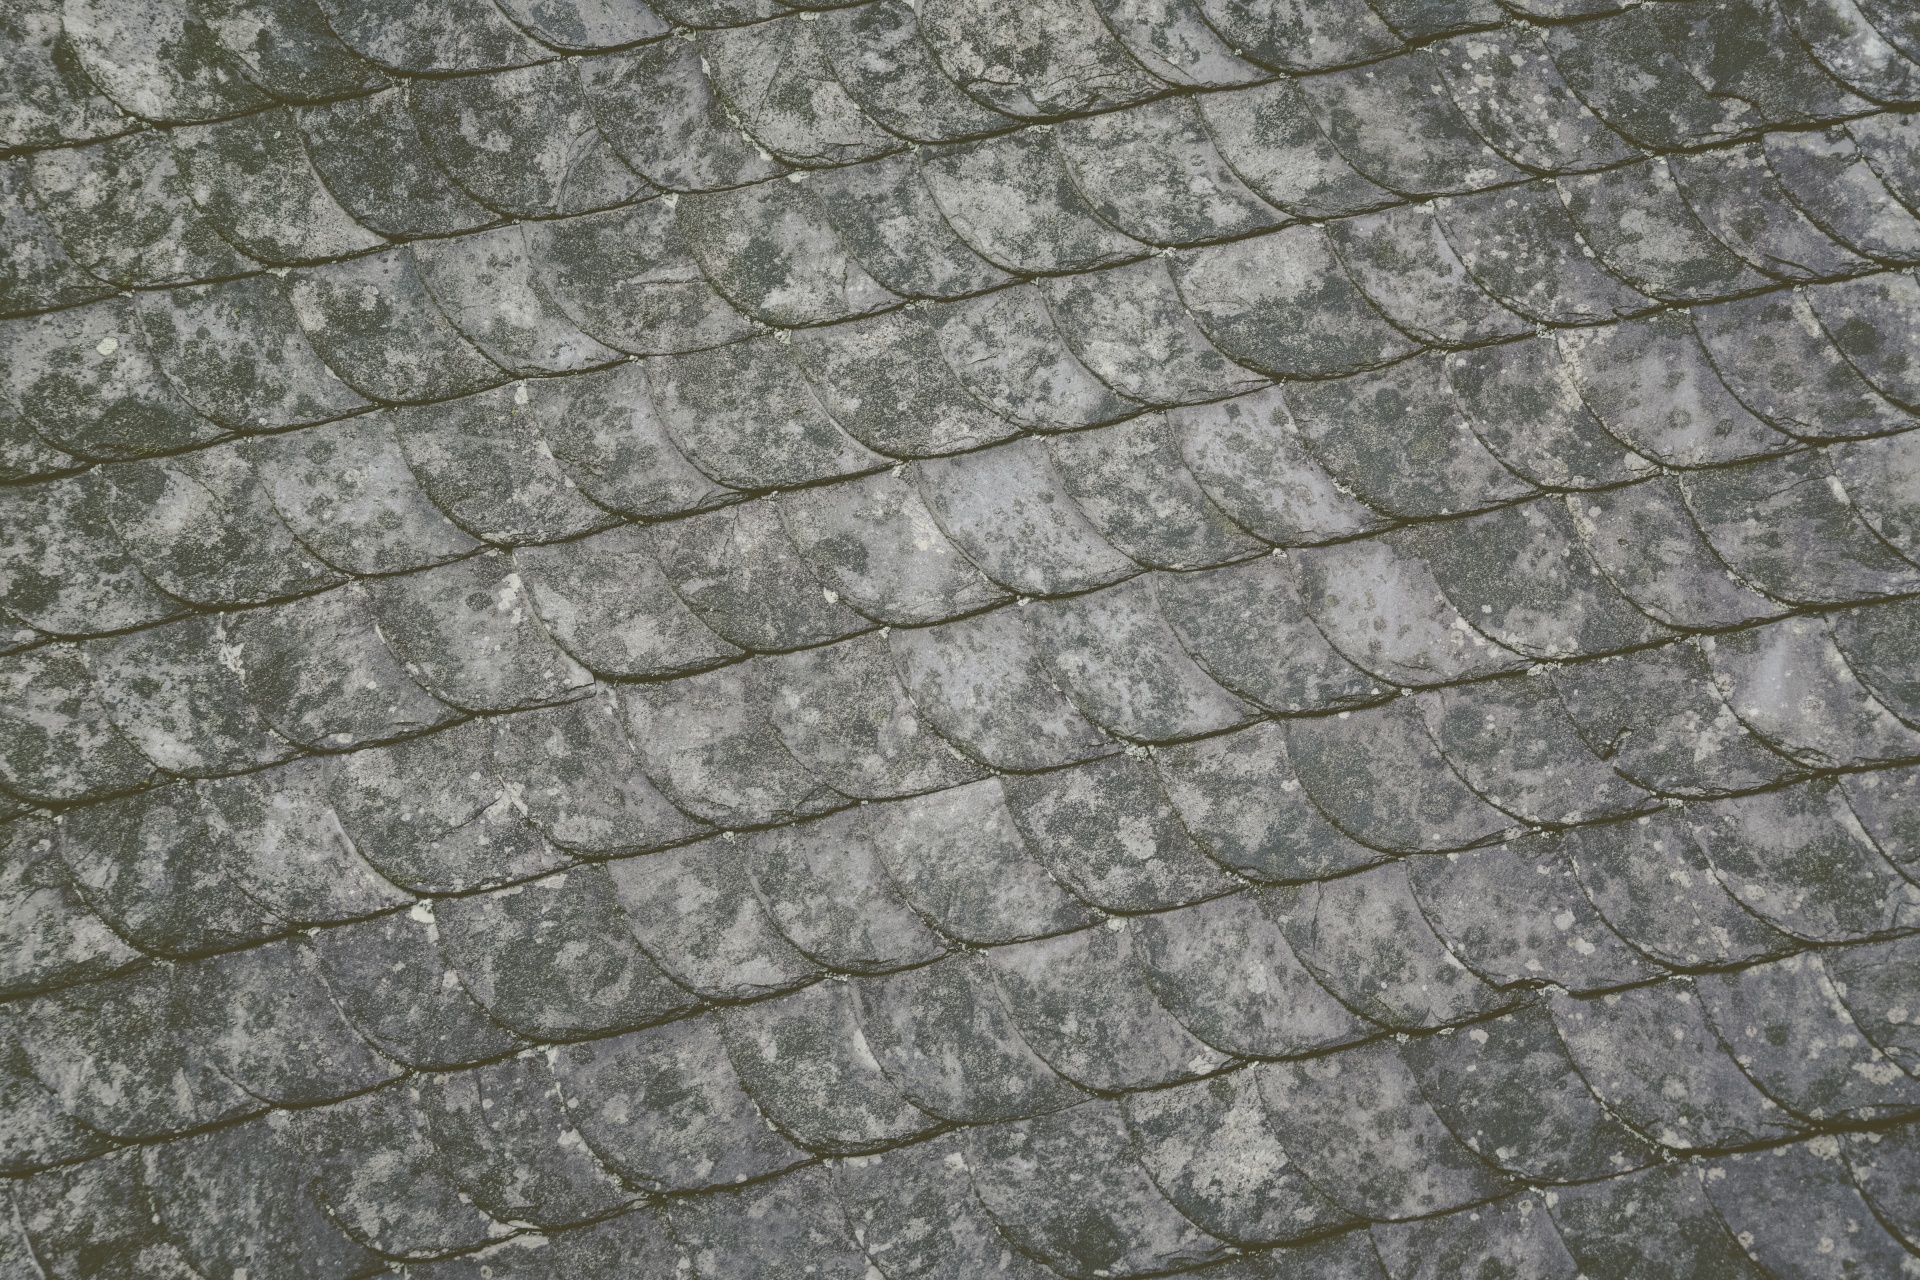 Aged natural slate roof tiles background image